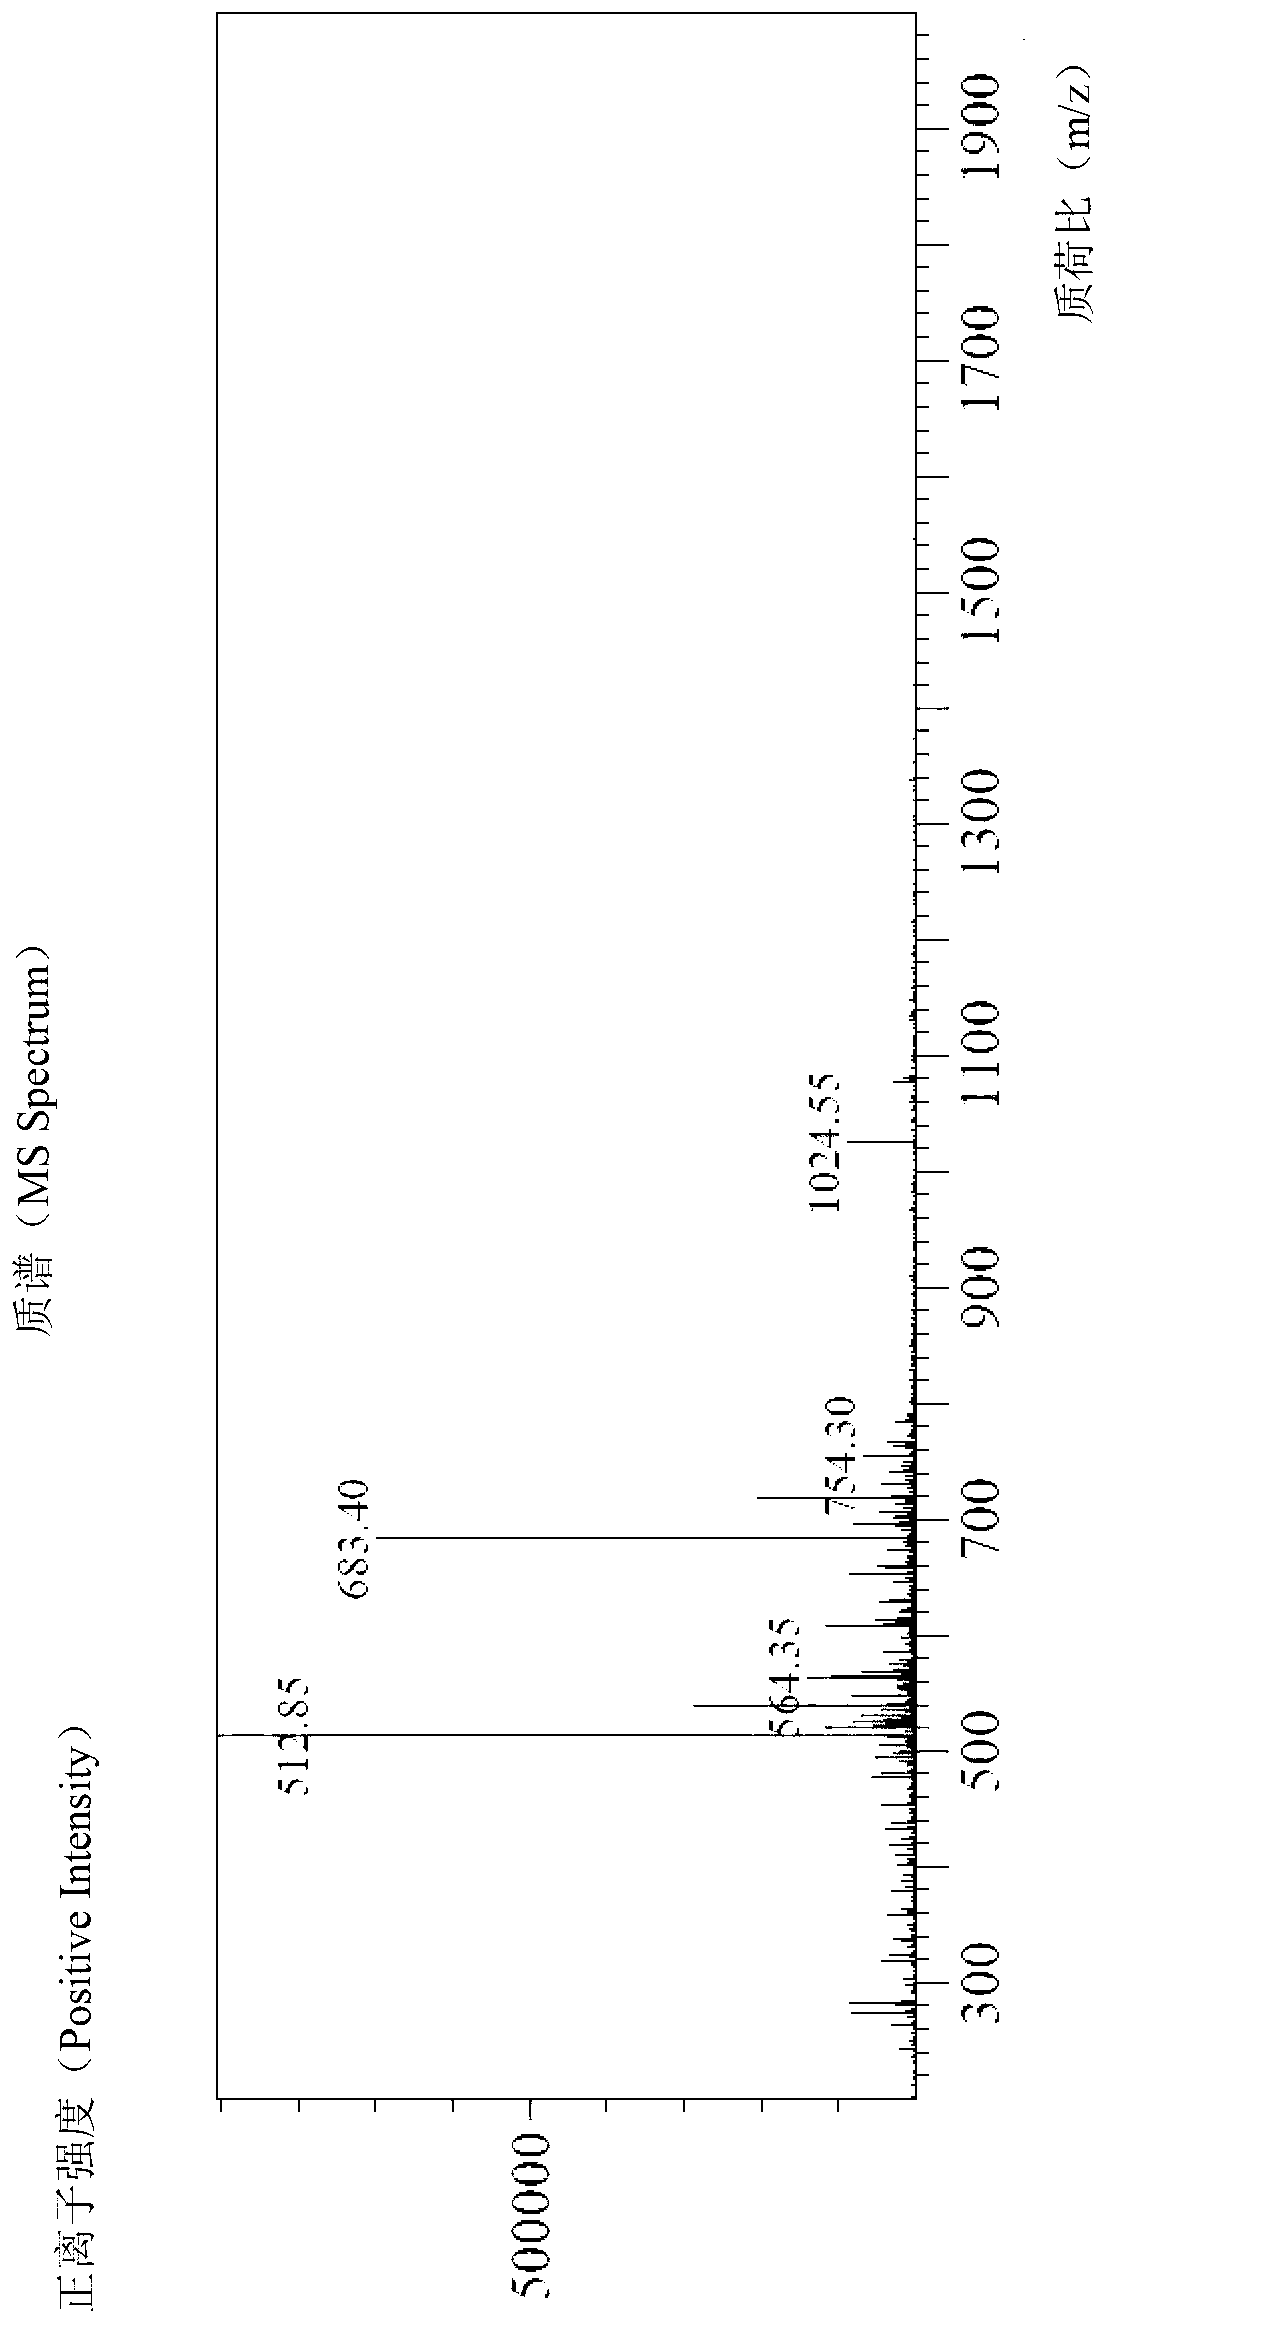 Solid-phase synthesis method of antibacterial peptide Iseganan